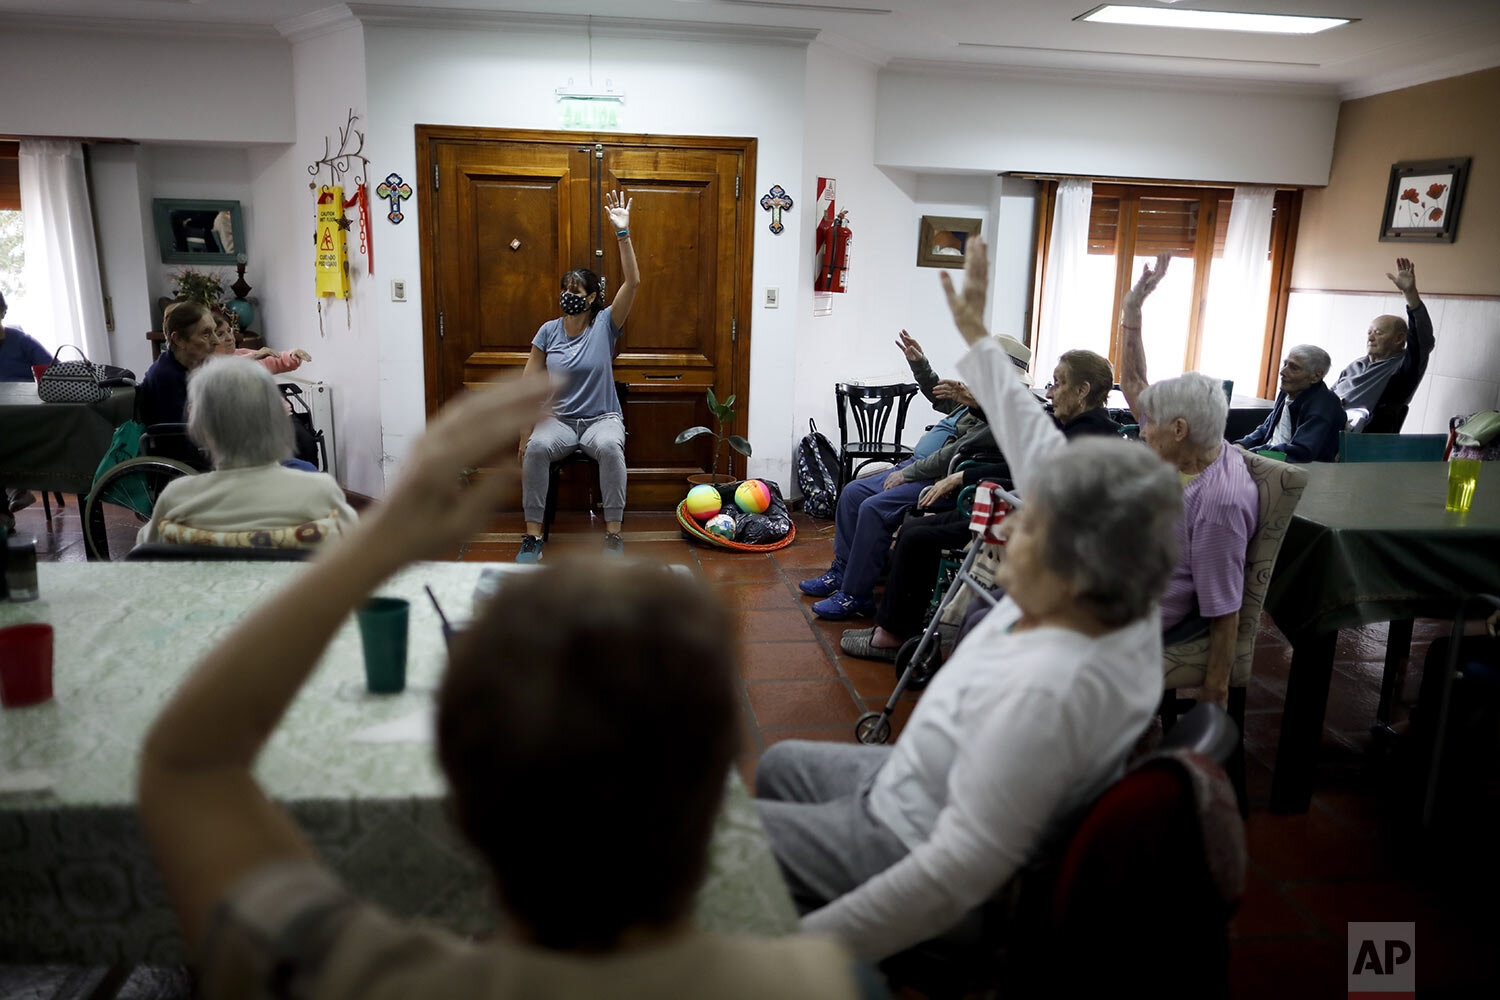  Belen Corrado leads an exercise class at Reminiscencias residence in Tandil, Argentina, Monday, April 5, 2021. (AP Photo/Natacha Pisarenko) 